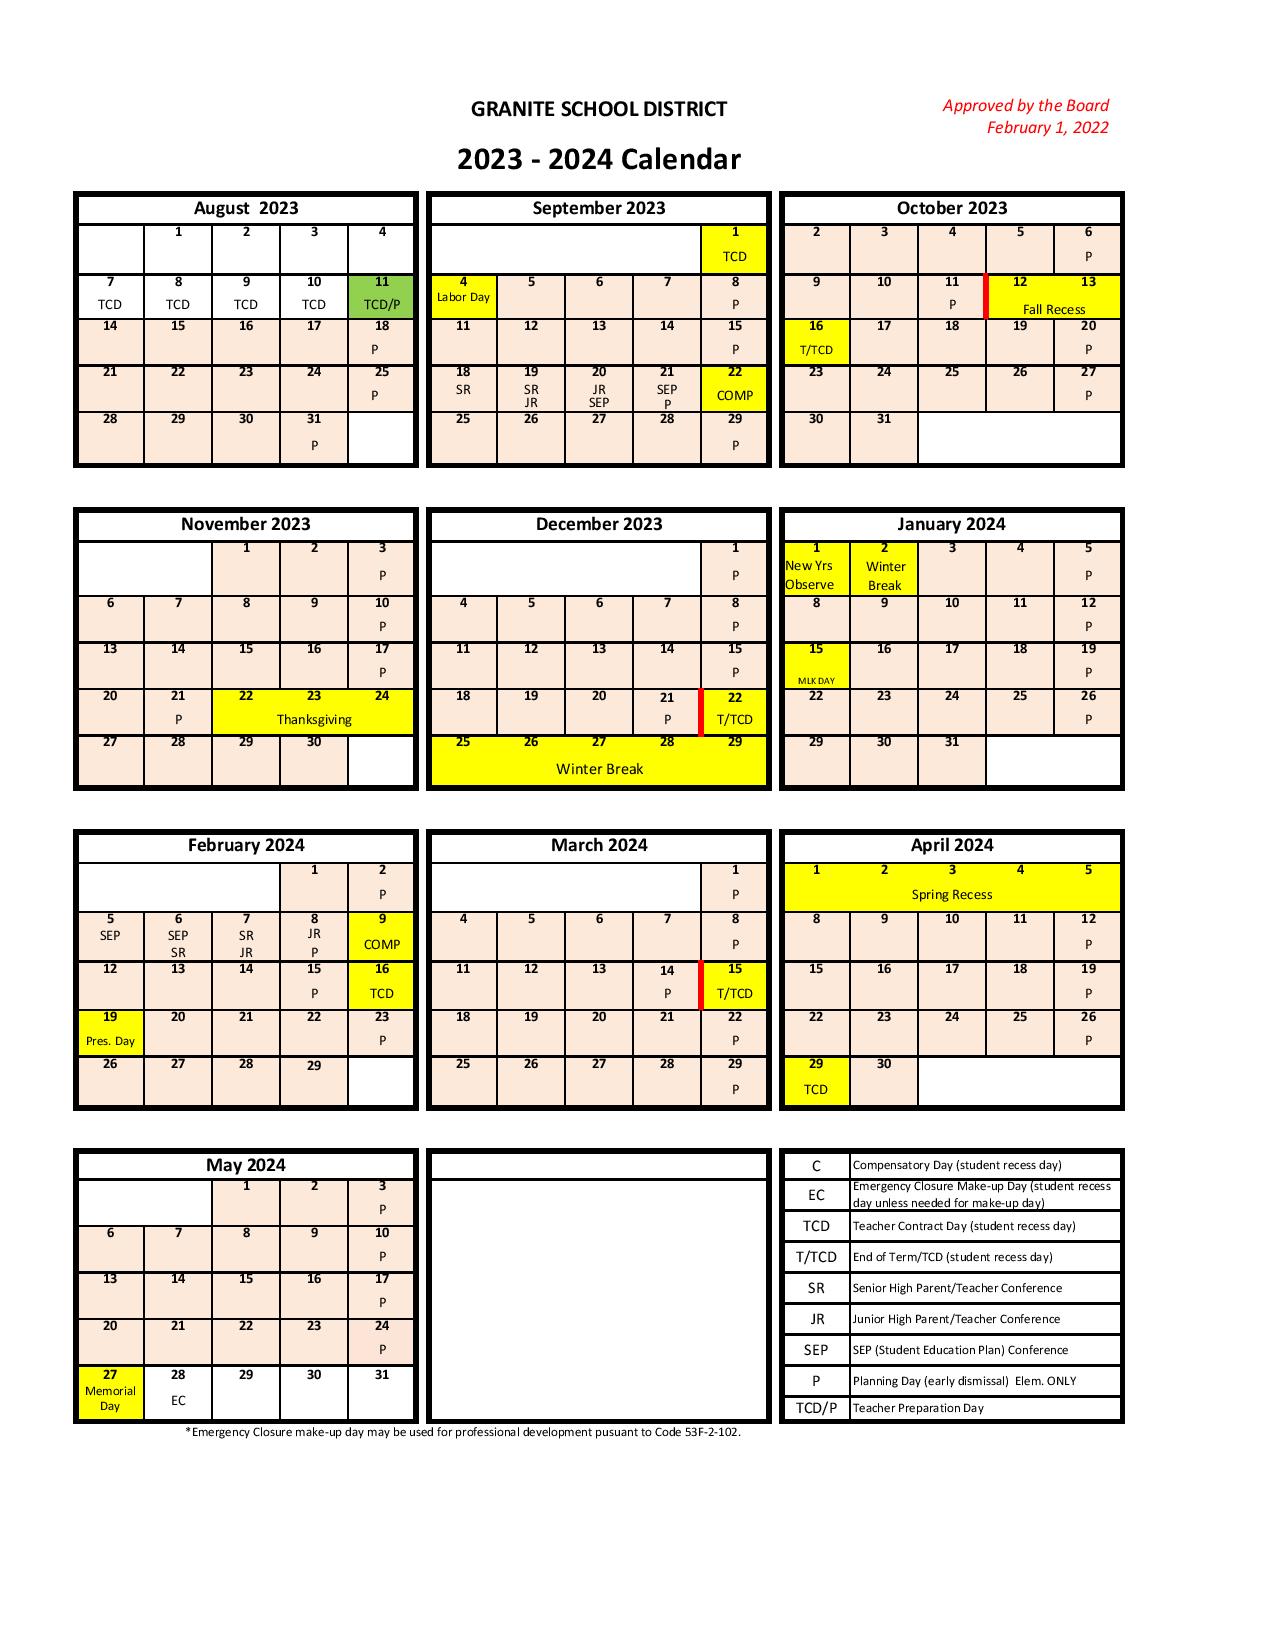 Granite School District Calendar Holidays 2023-2024